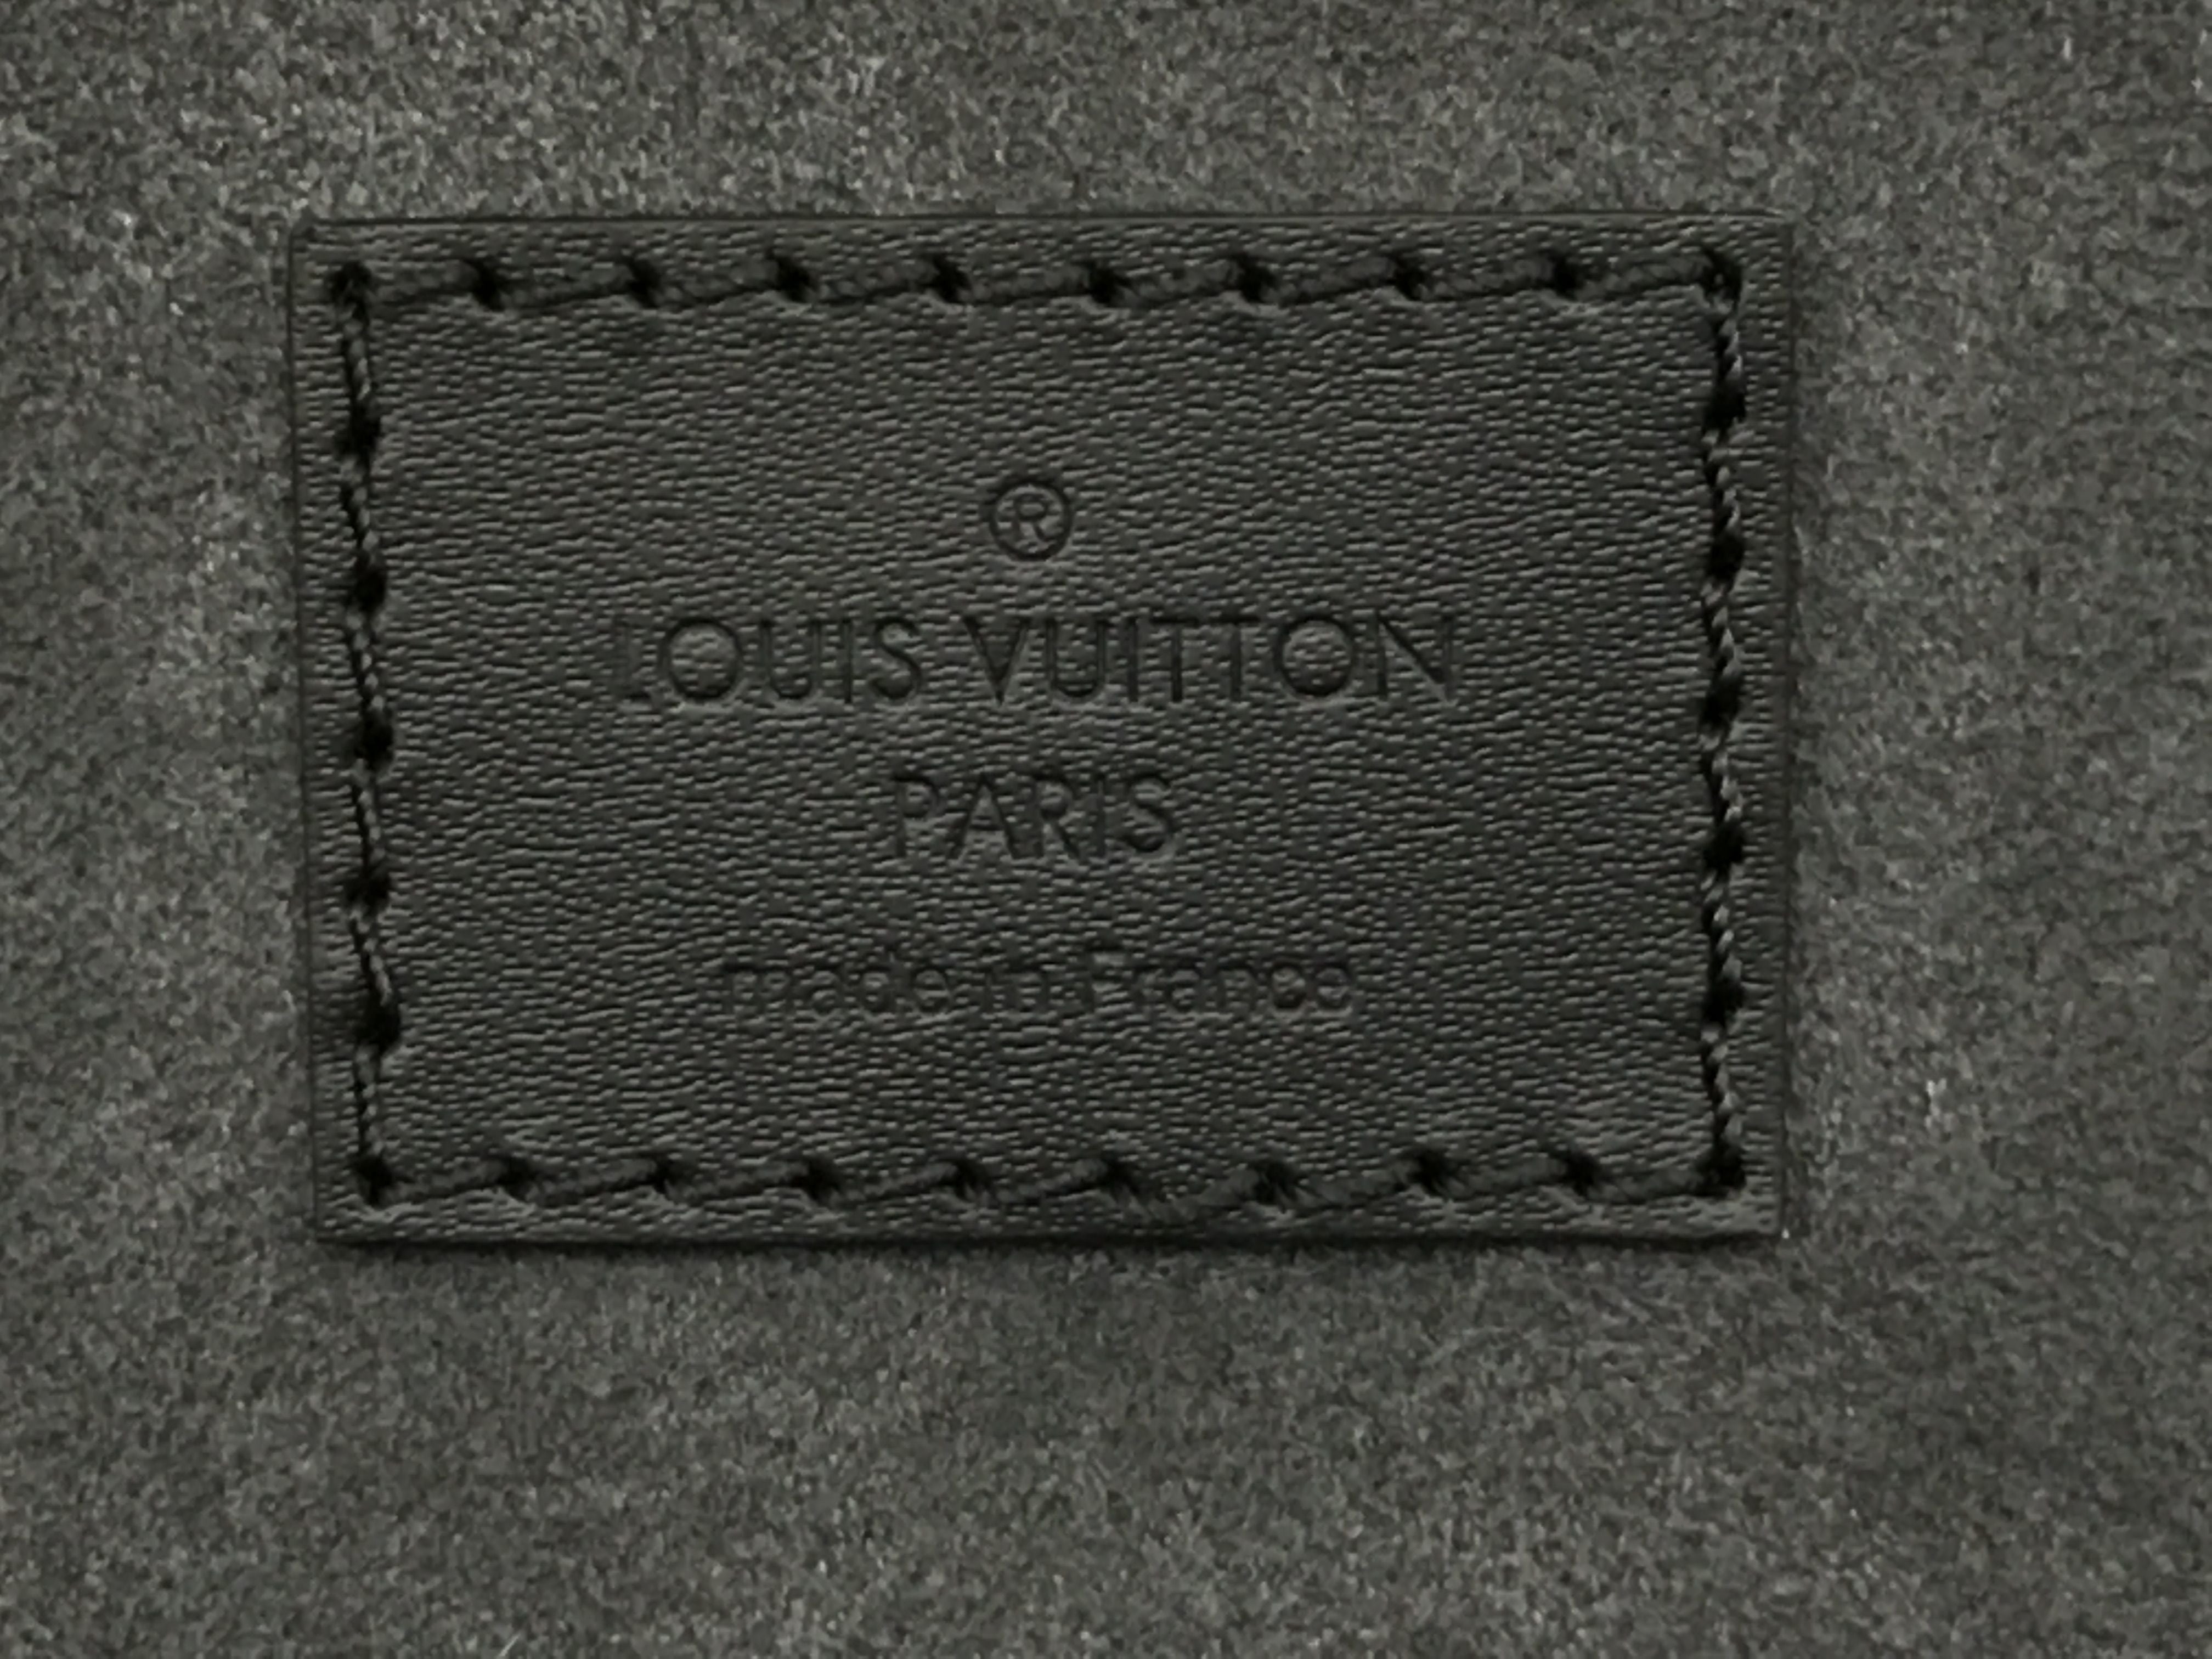 Shop Louis Vuitton MONOGRAM 2021 SS 8 watch case (M47641) by SkyNS